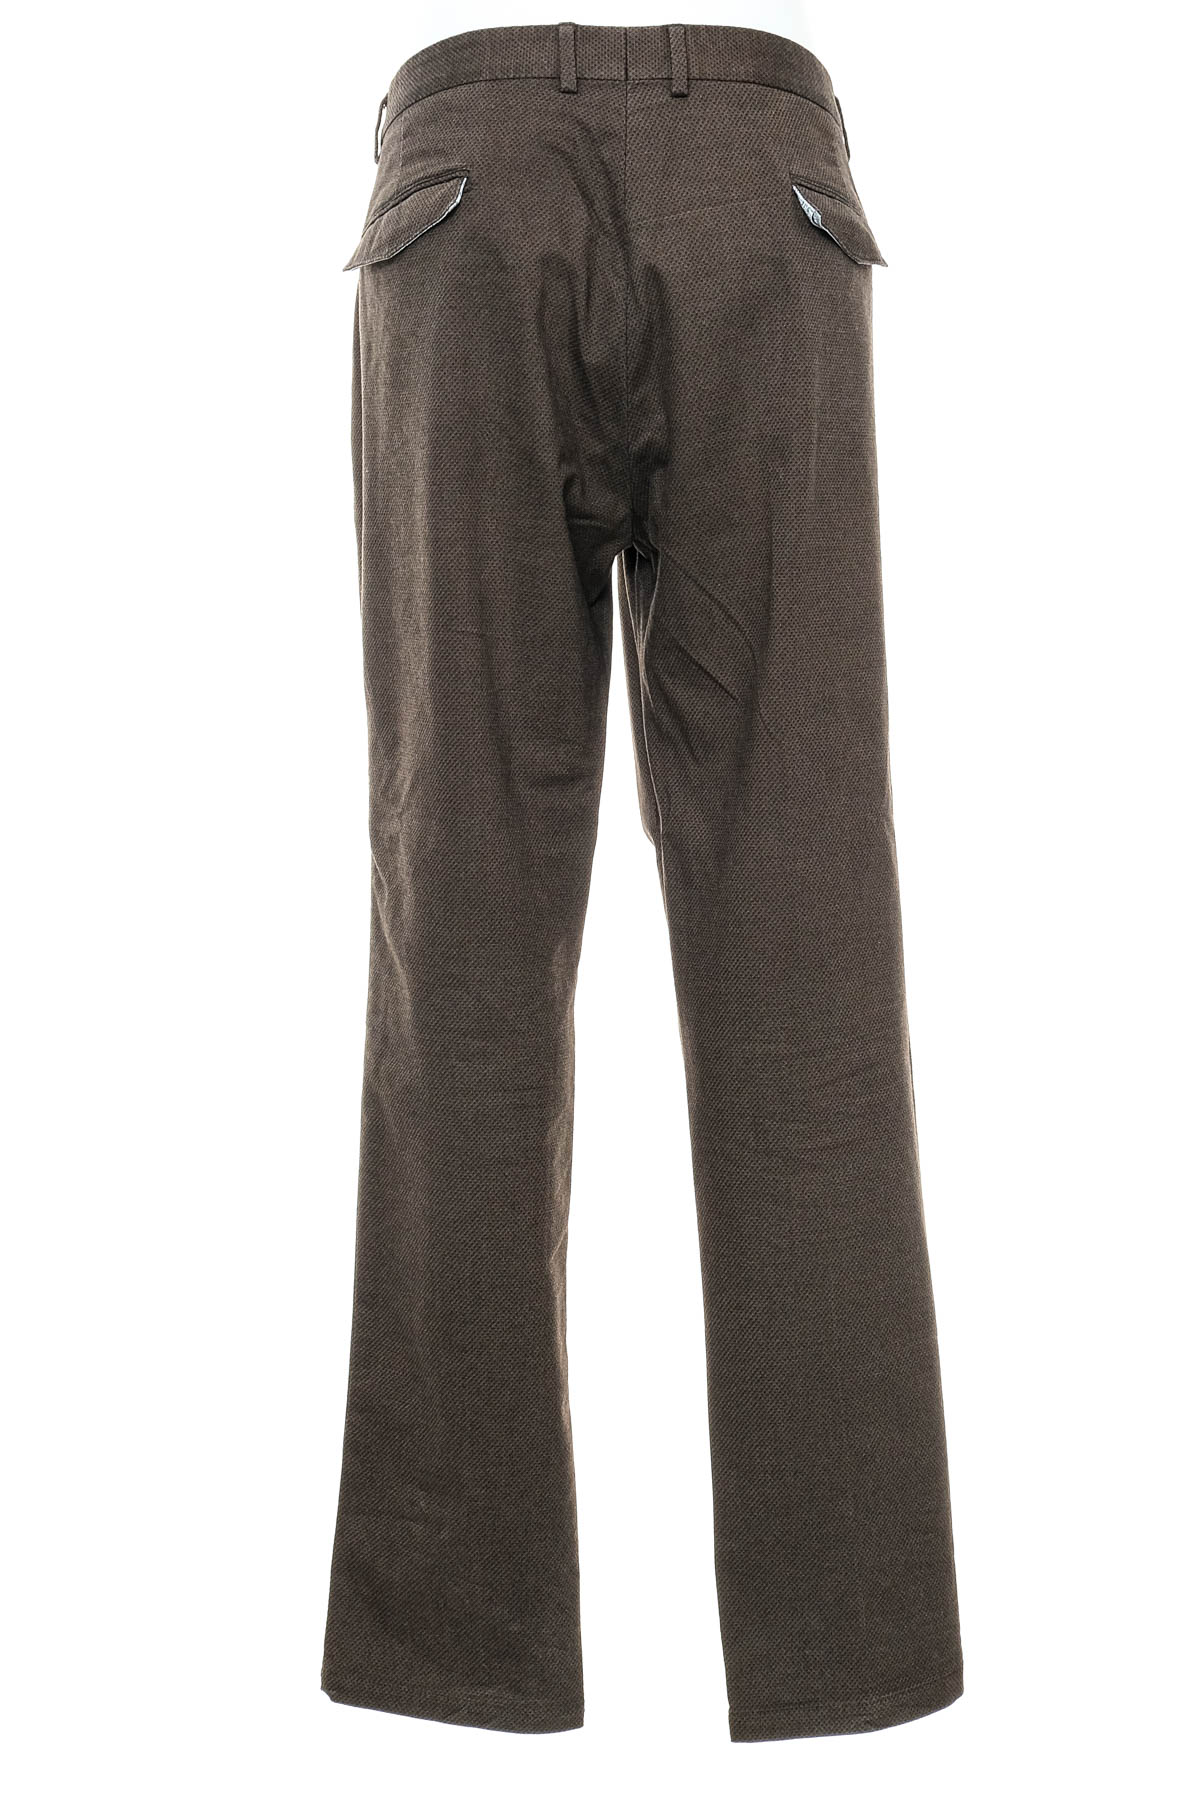 Men's trousers - ANDREWS - 1